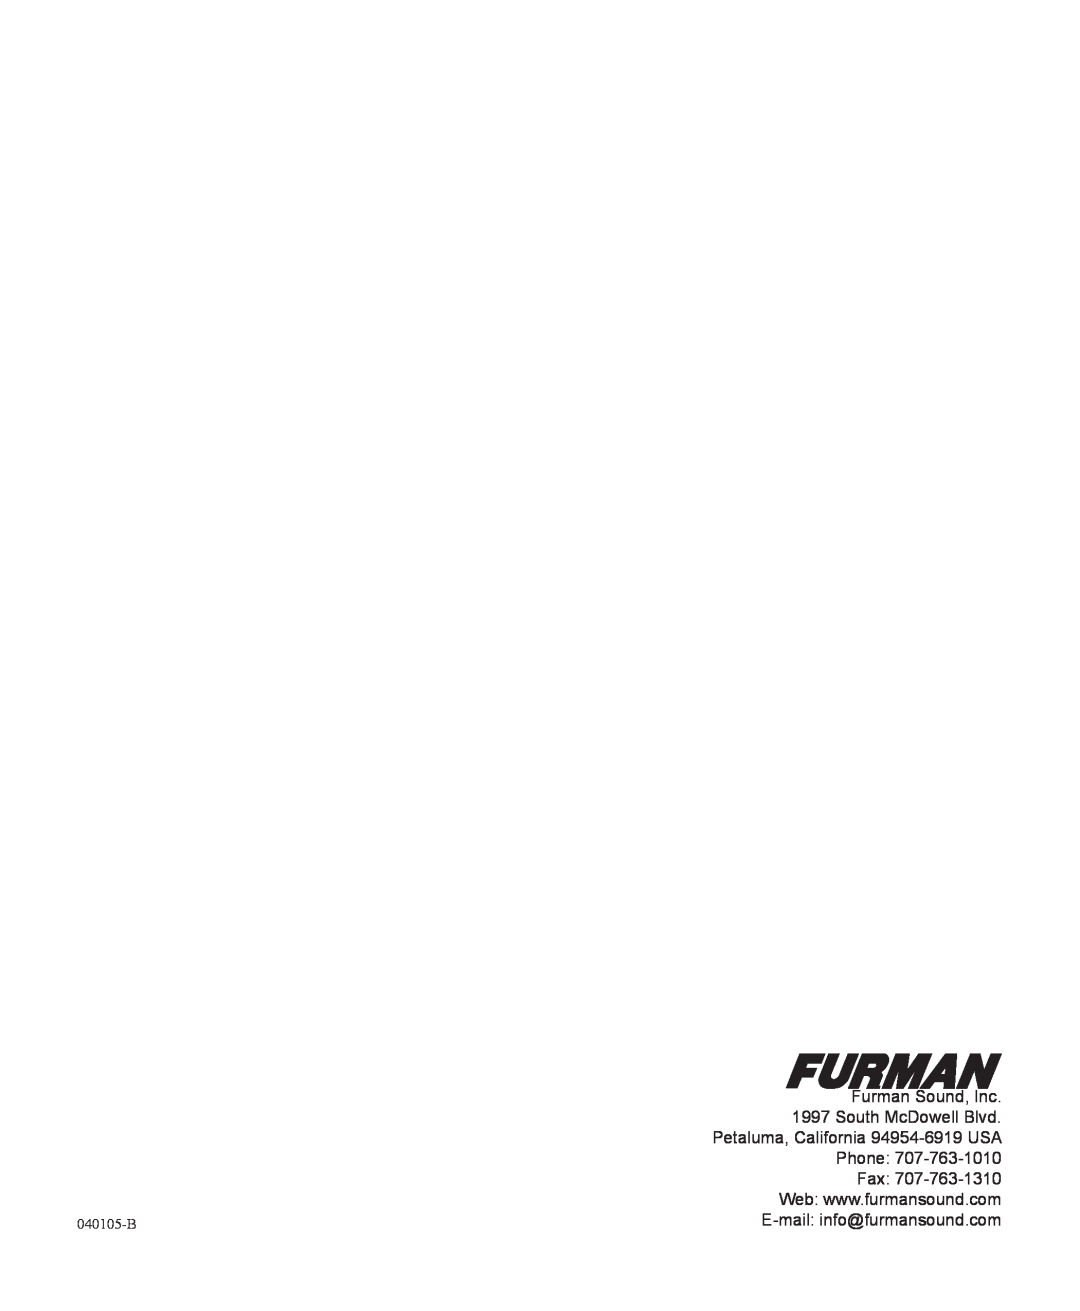 Furman Sound pmn manual Furman Sound, Inc, South McDowell Blvd, Petaluma, California 94954-6919USA, Phone, Fax, 040105-B 